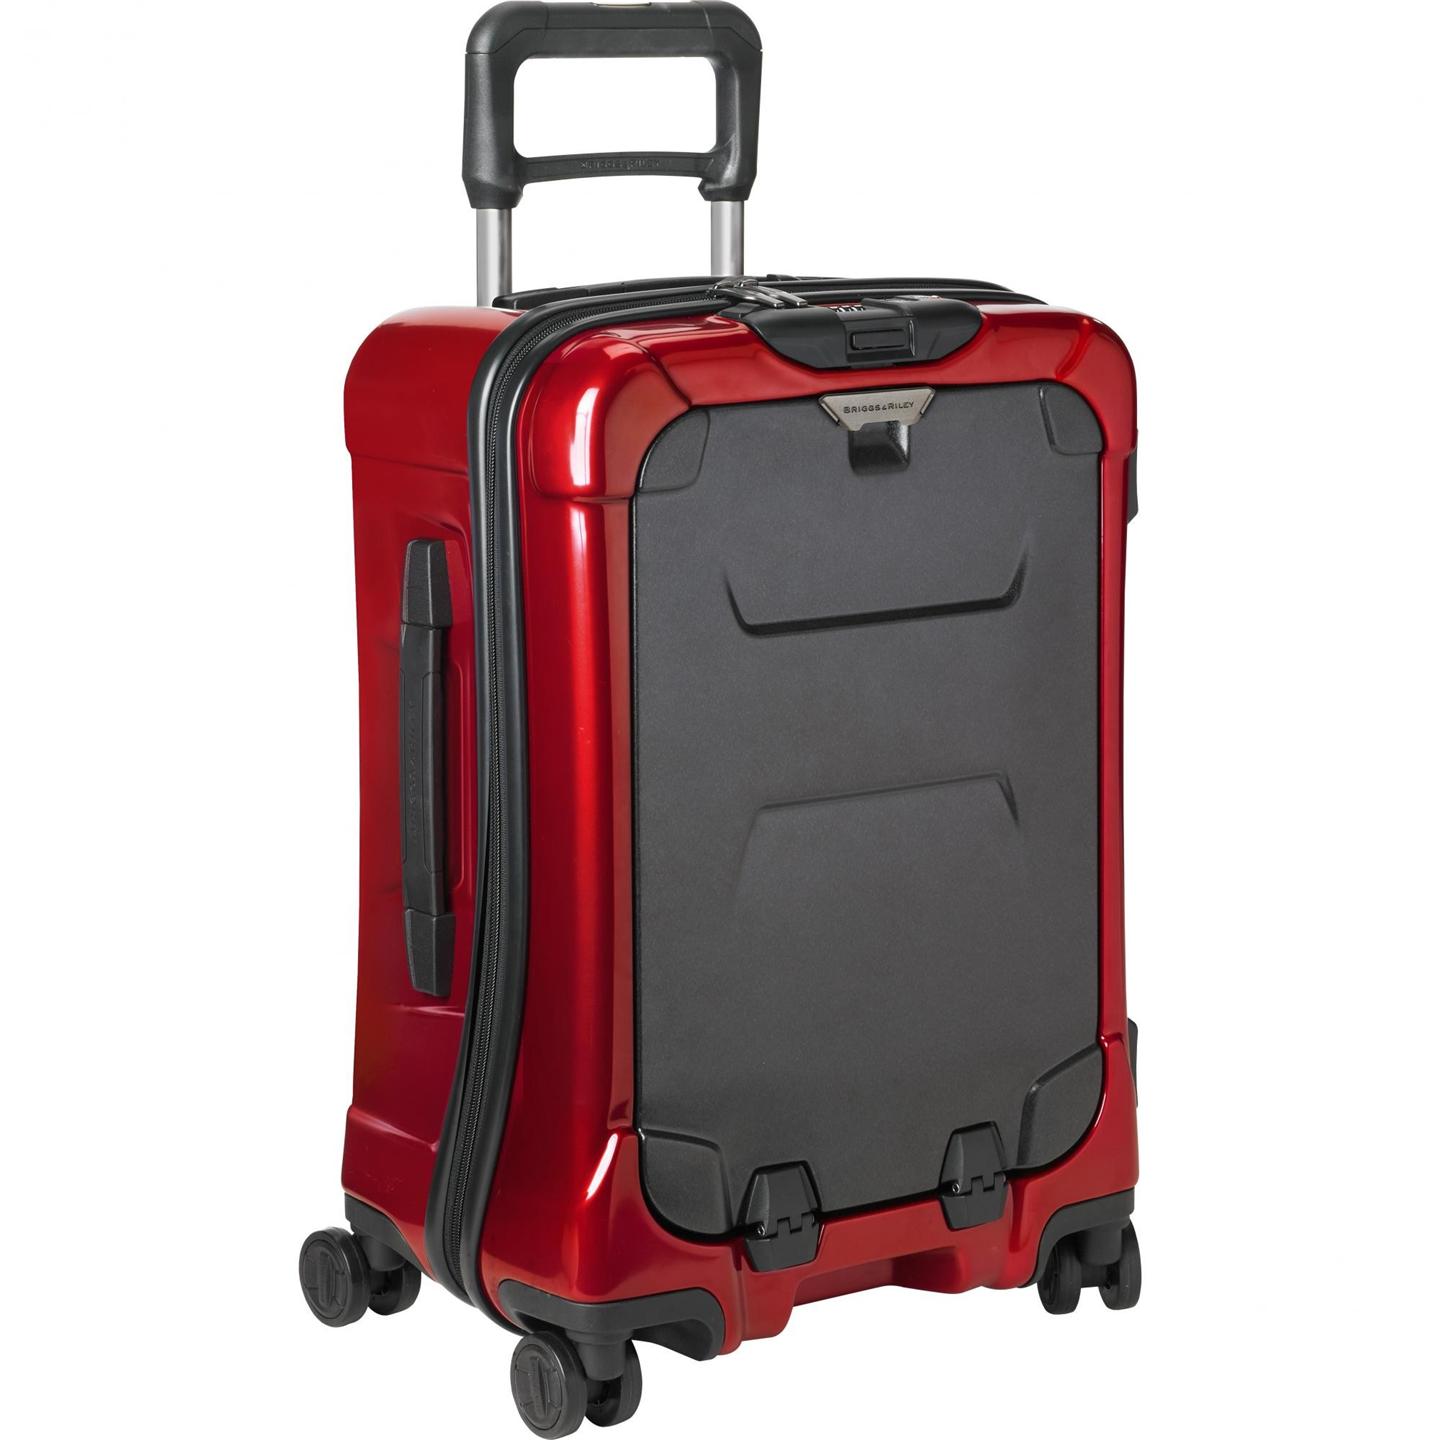 Briggs & Riley Torq International Carry-On Spinner Hardside Luggage RED QU121SP | eBay